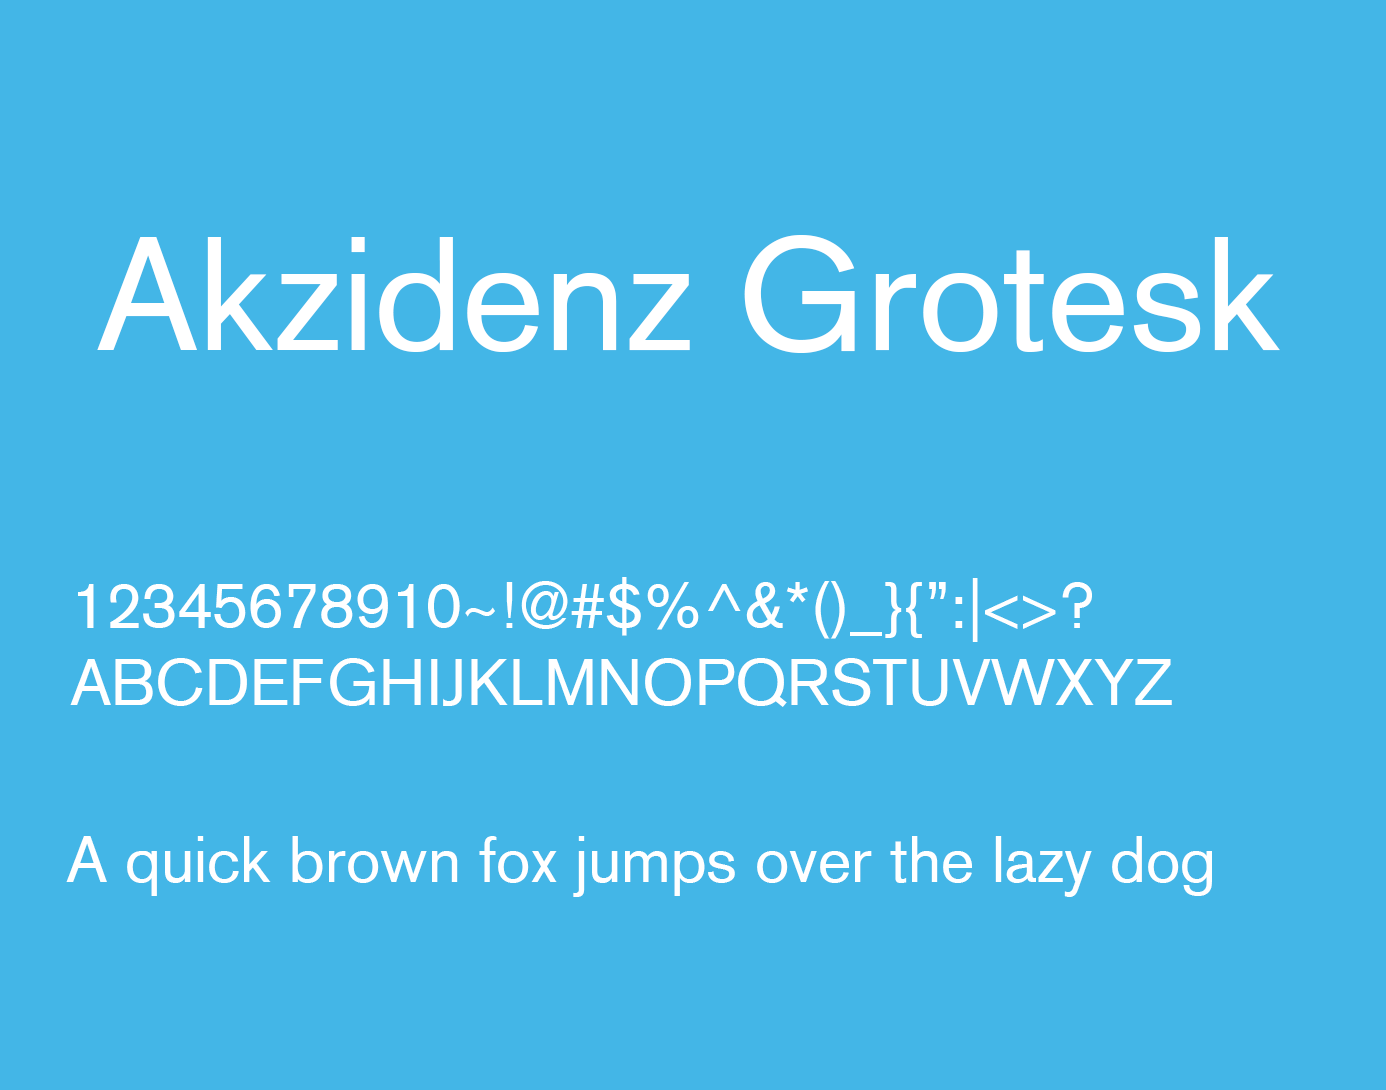 berthold akzidenz grotesk medium font free download